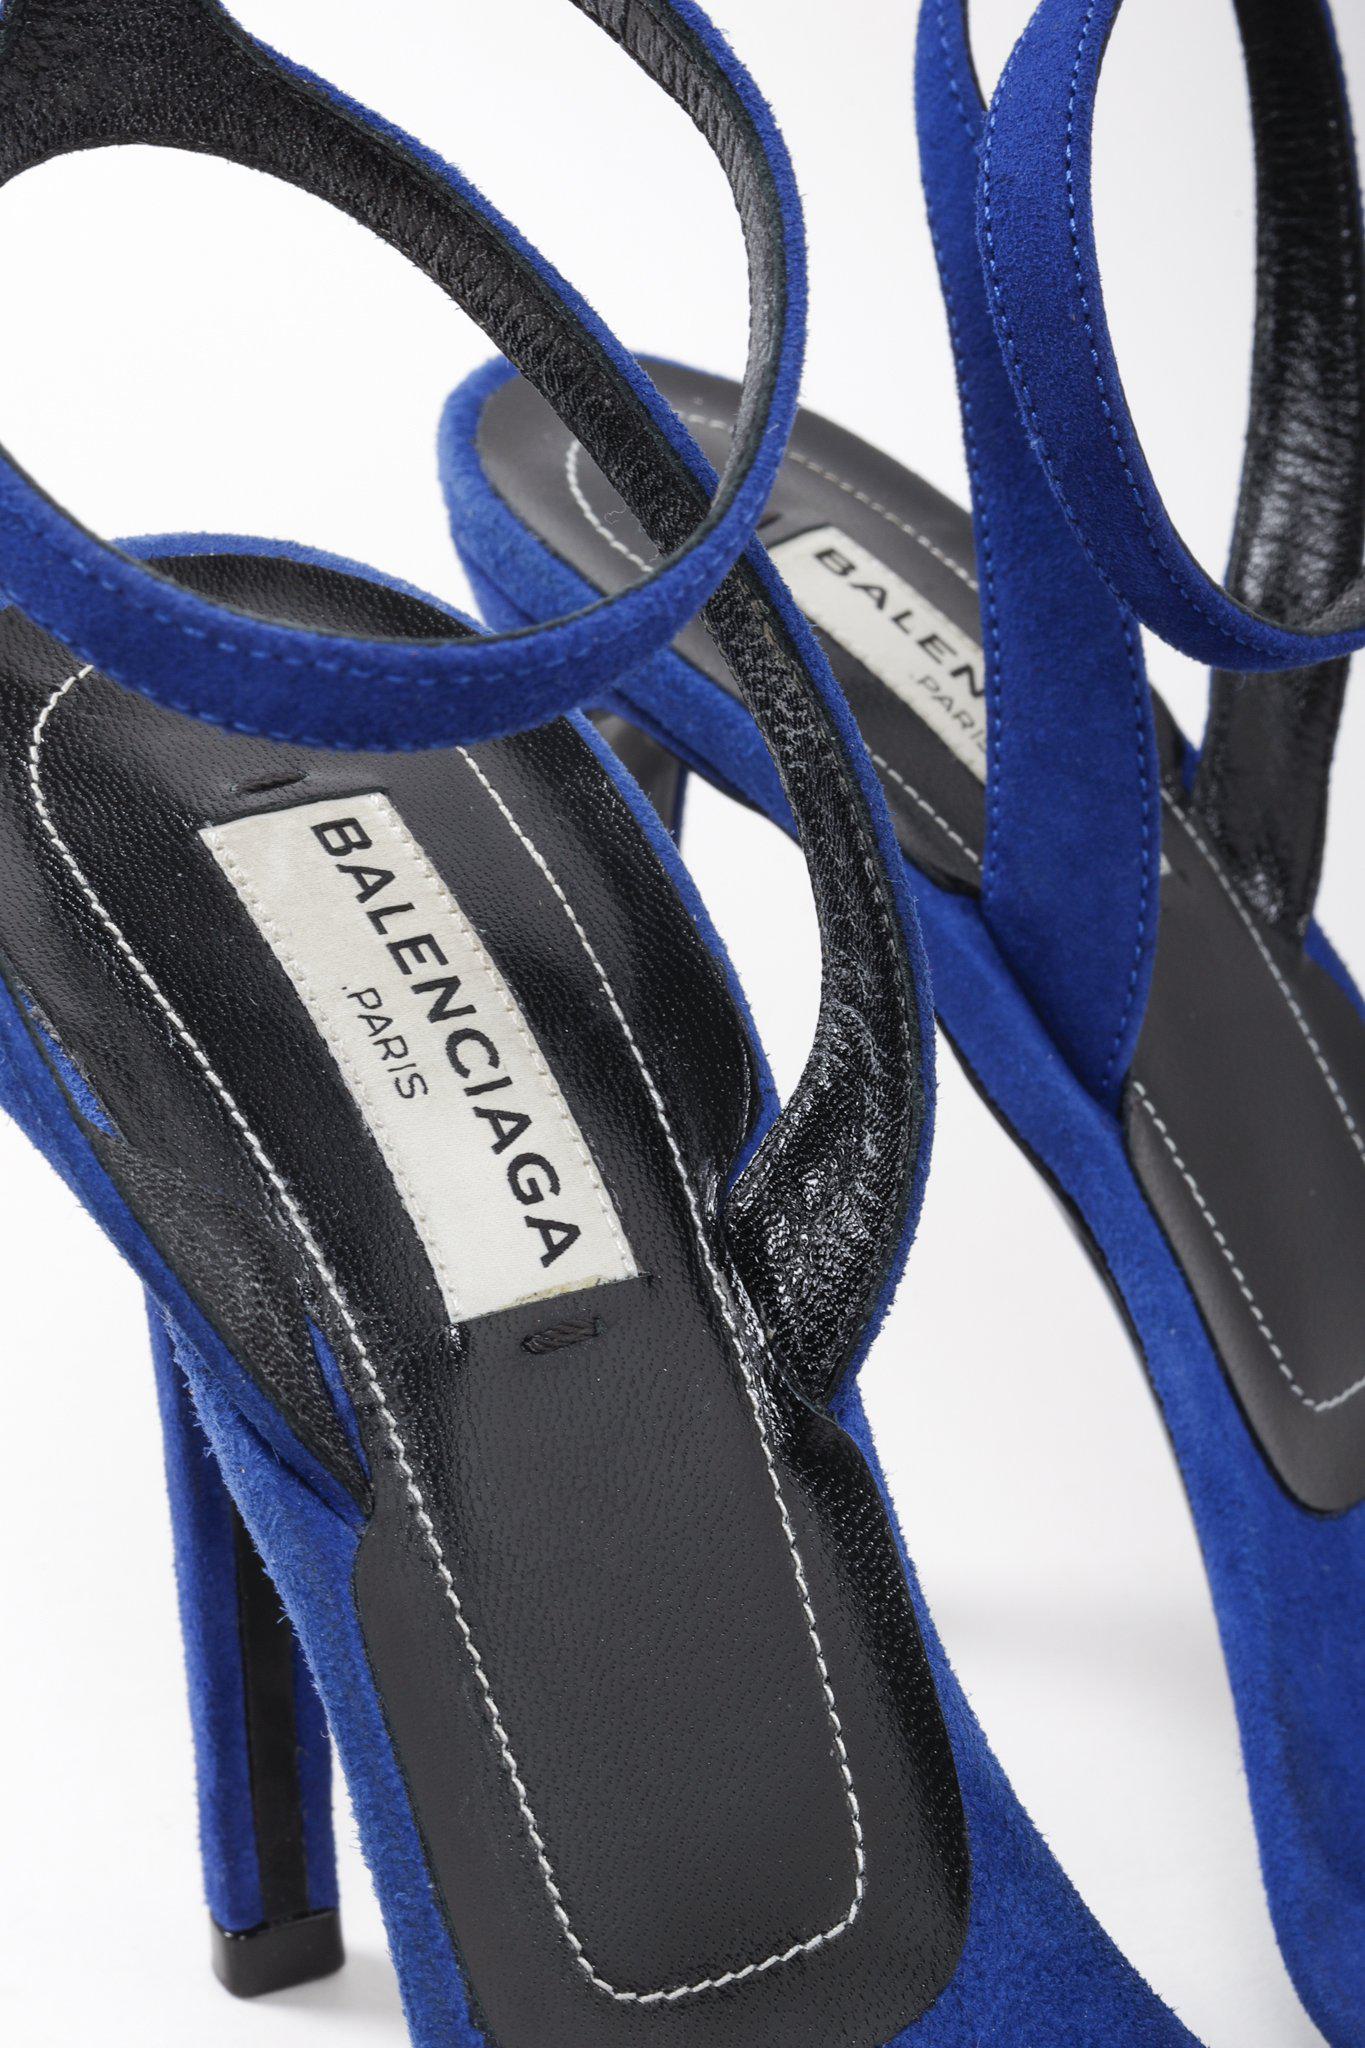 Balenciaga Electric Blue Suede Sandals